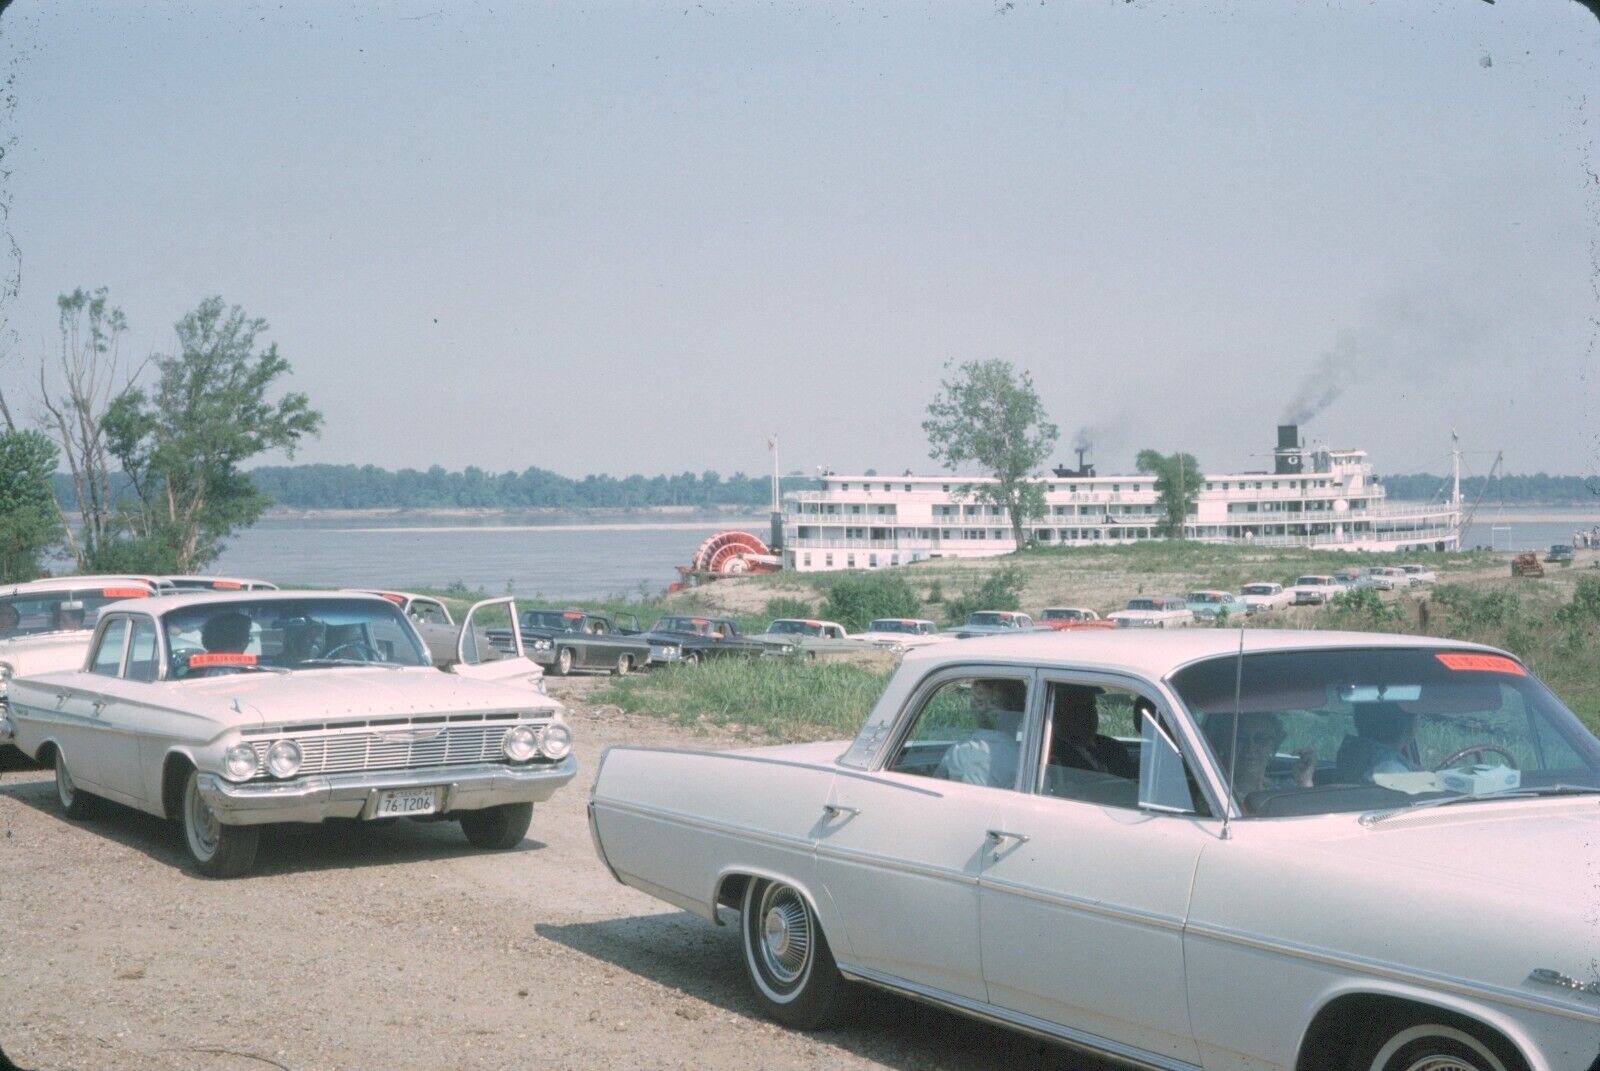 1964 Delta Queen Steamboat Mississippi River New Orleans Cars Lined 35mm Slide